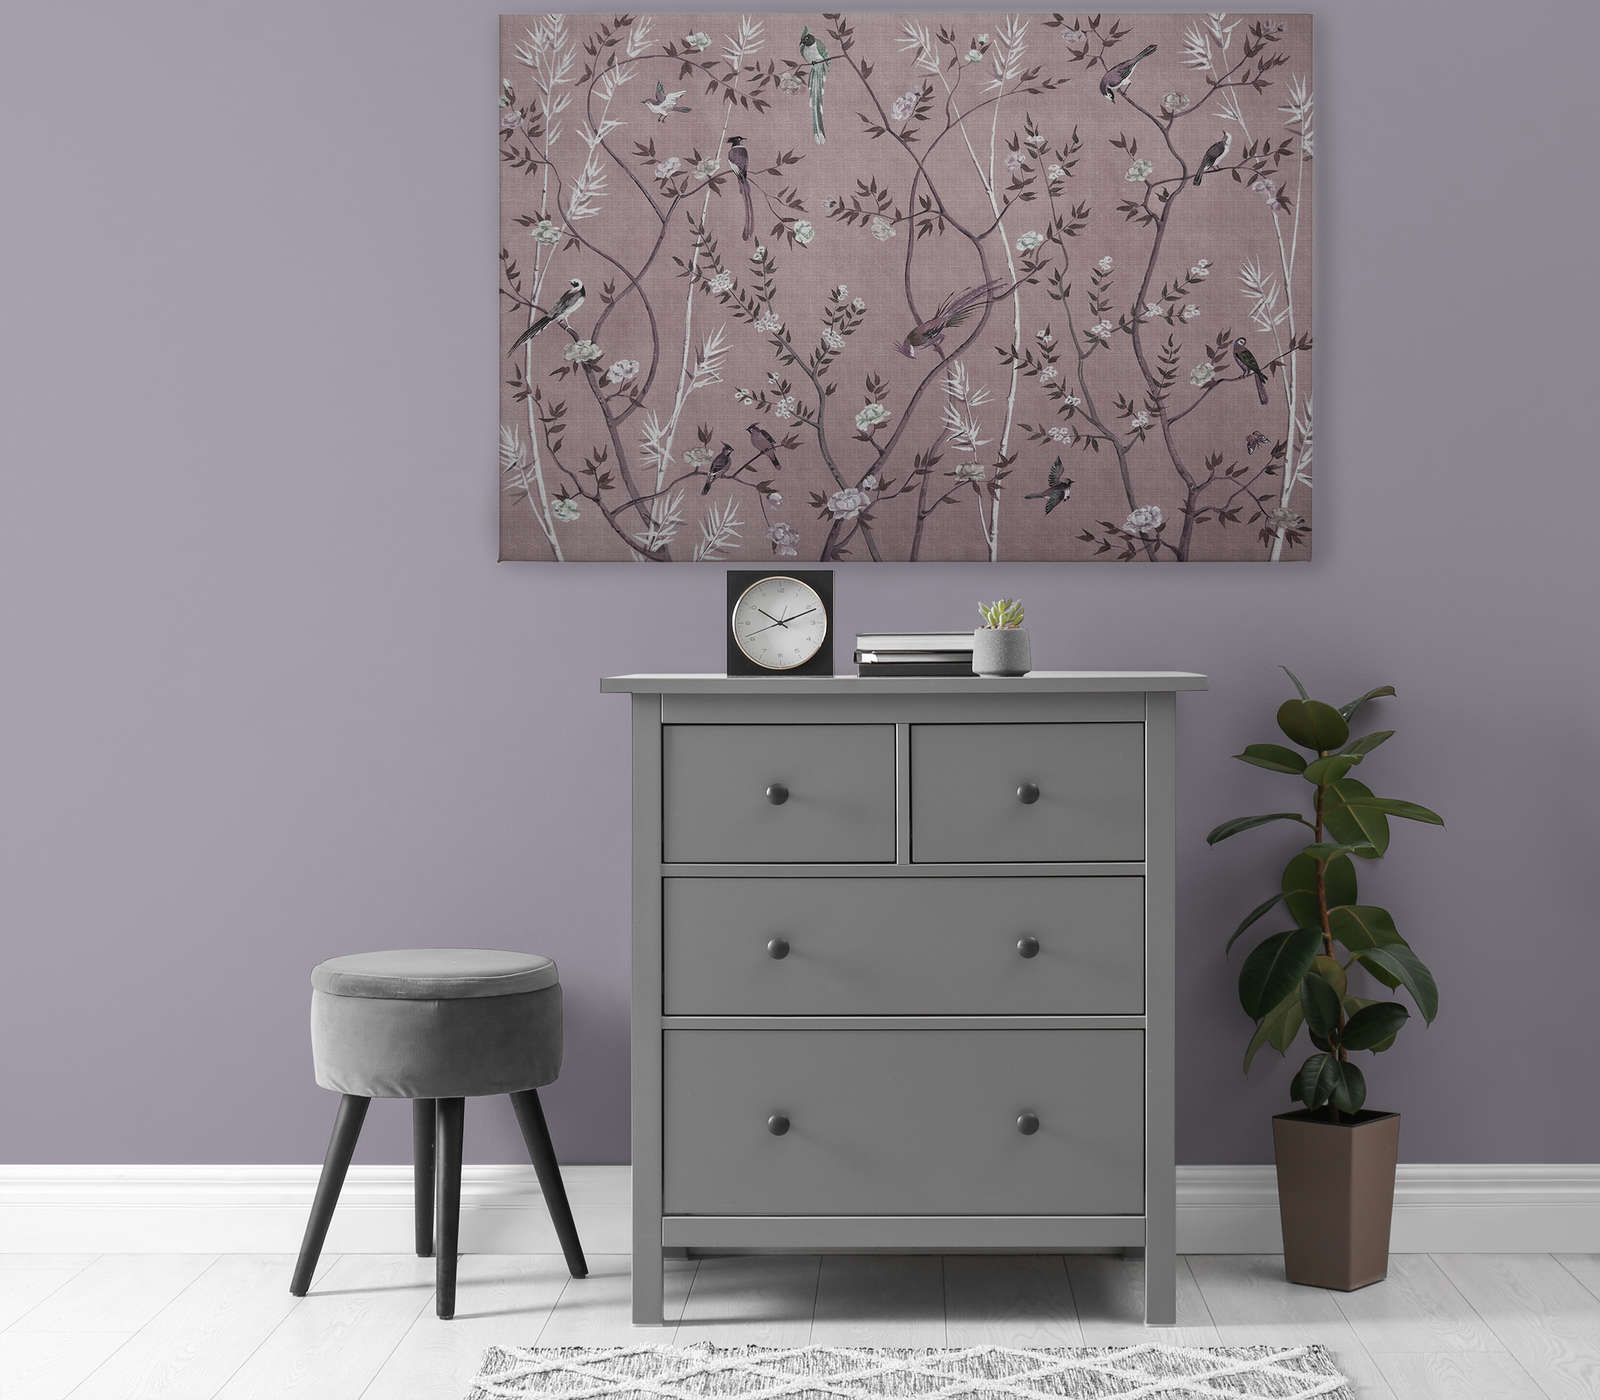             Tea Room 3 - Canvas schilderij Birds & Blossoms Design in Roze & Wit - 1.20 m x 0.80 m
        